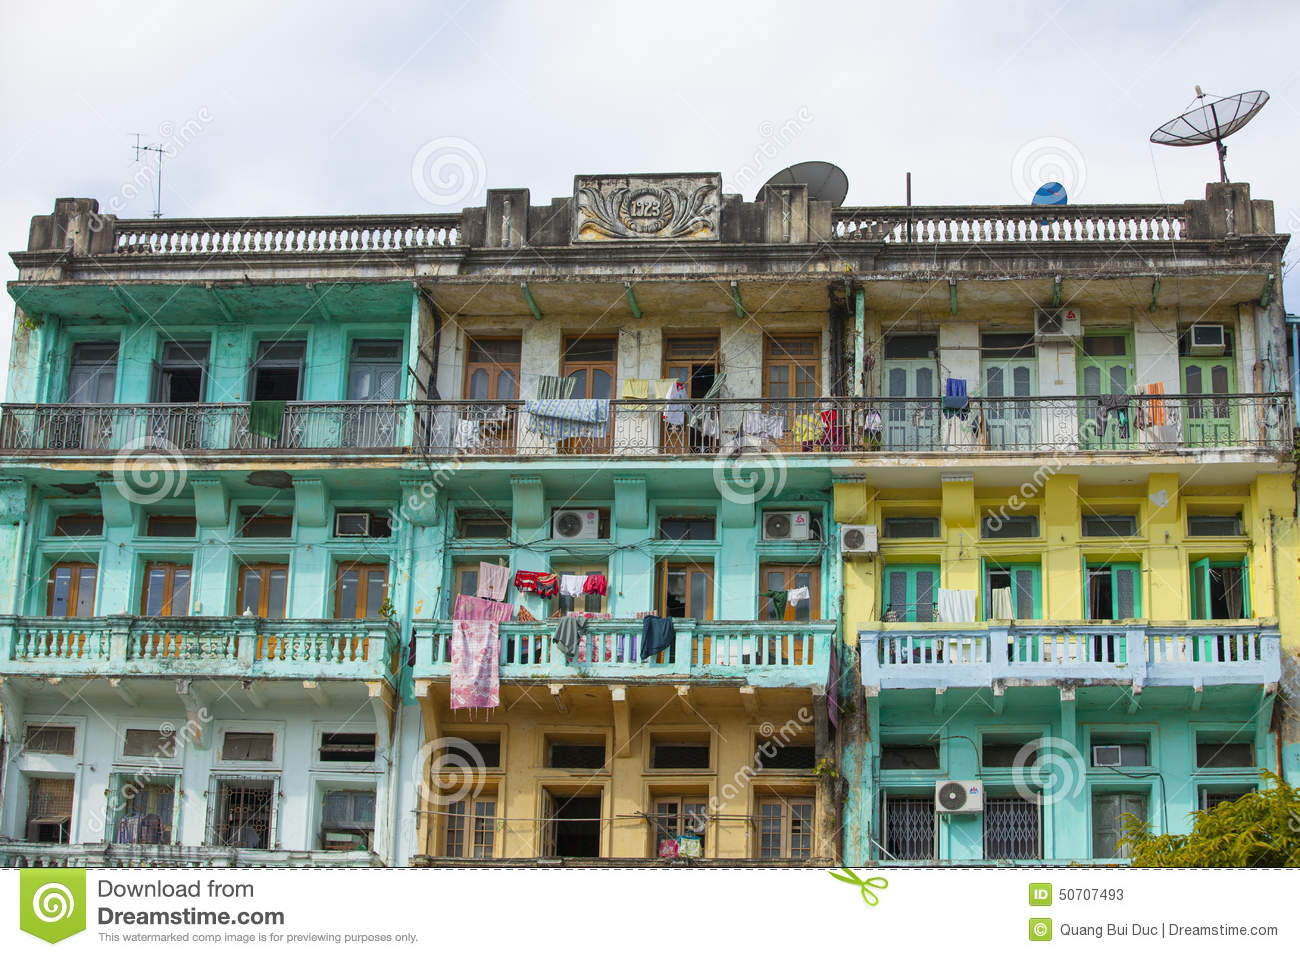 old-residential-building-yangon-myanmar-jan-myanmar-century-buildings-magnificent-architecture-main-tourist-50707493.jpg